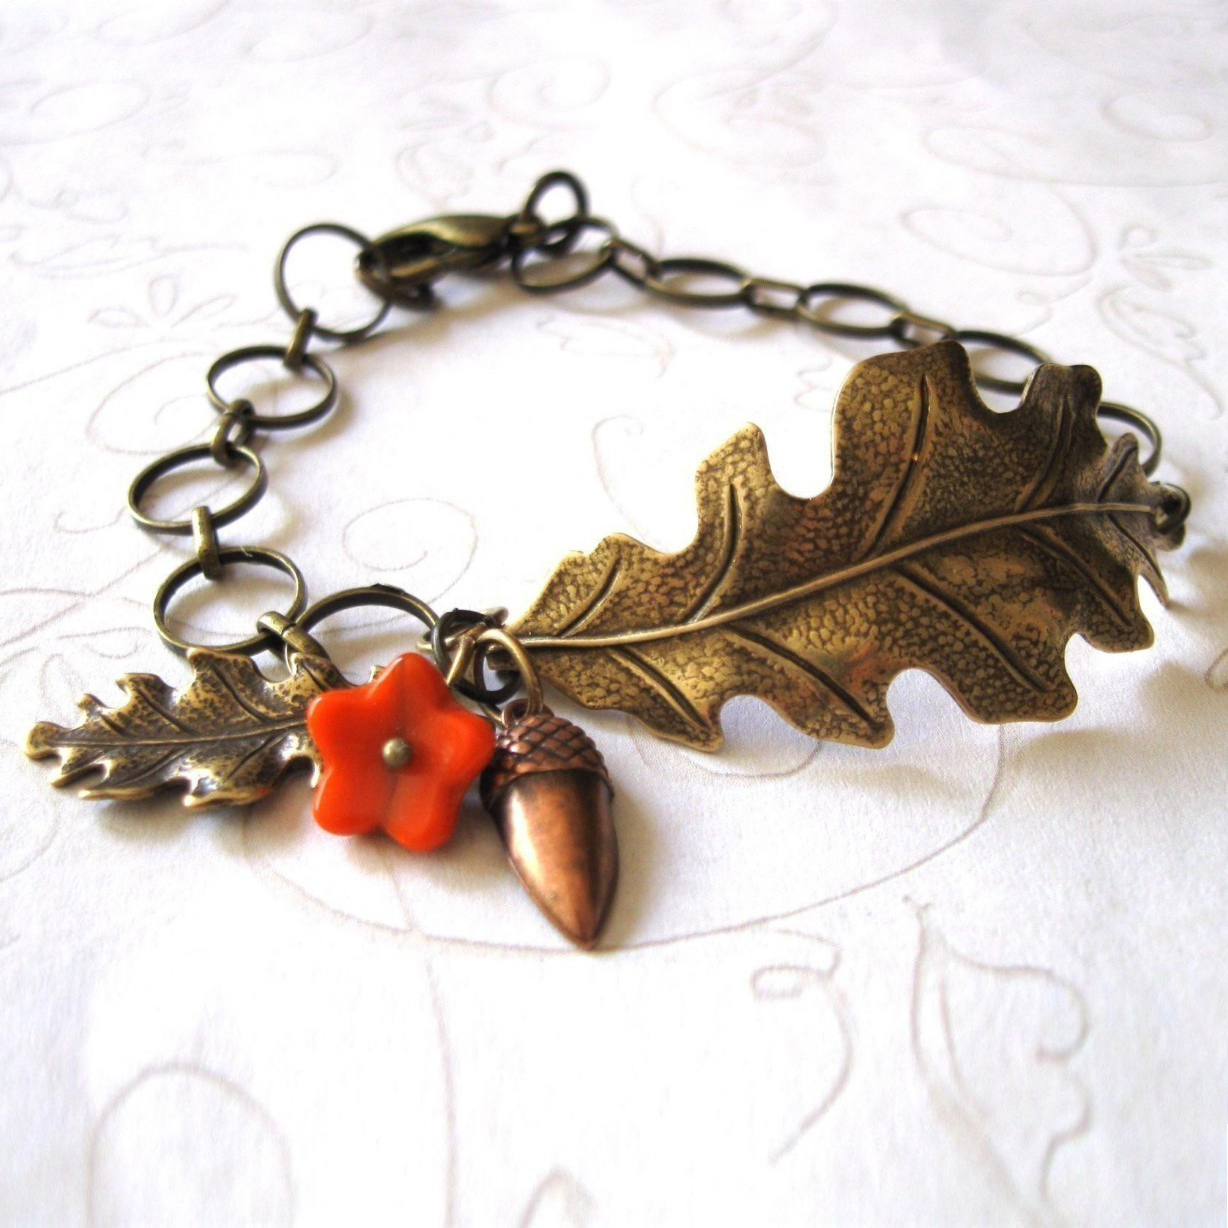 Brass leaf bracelet, glass pearls, toggle clasp